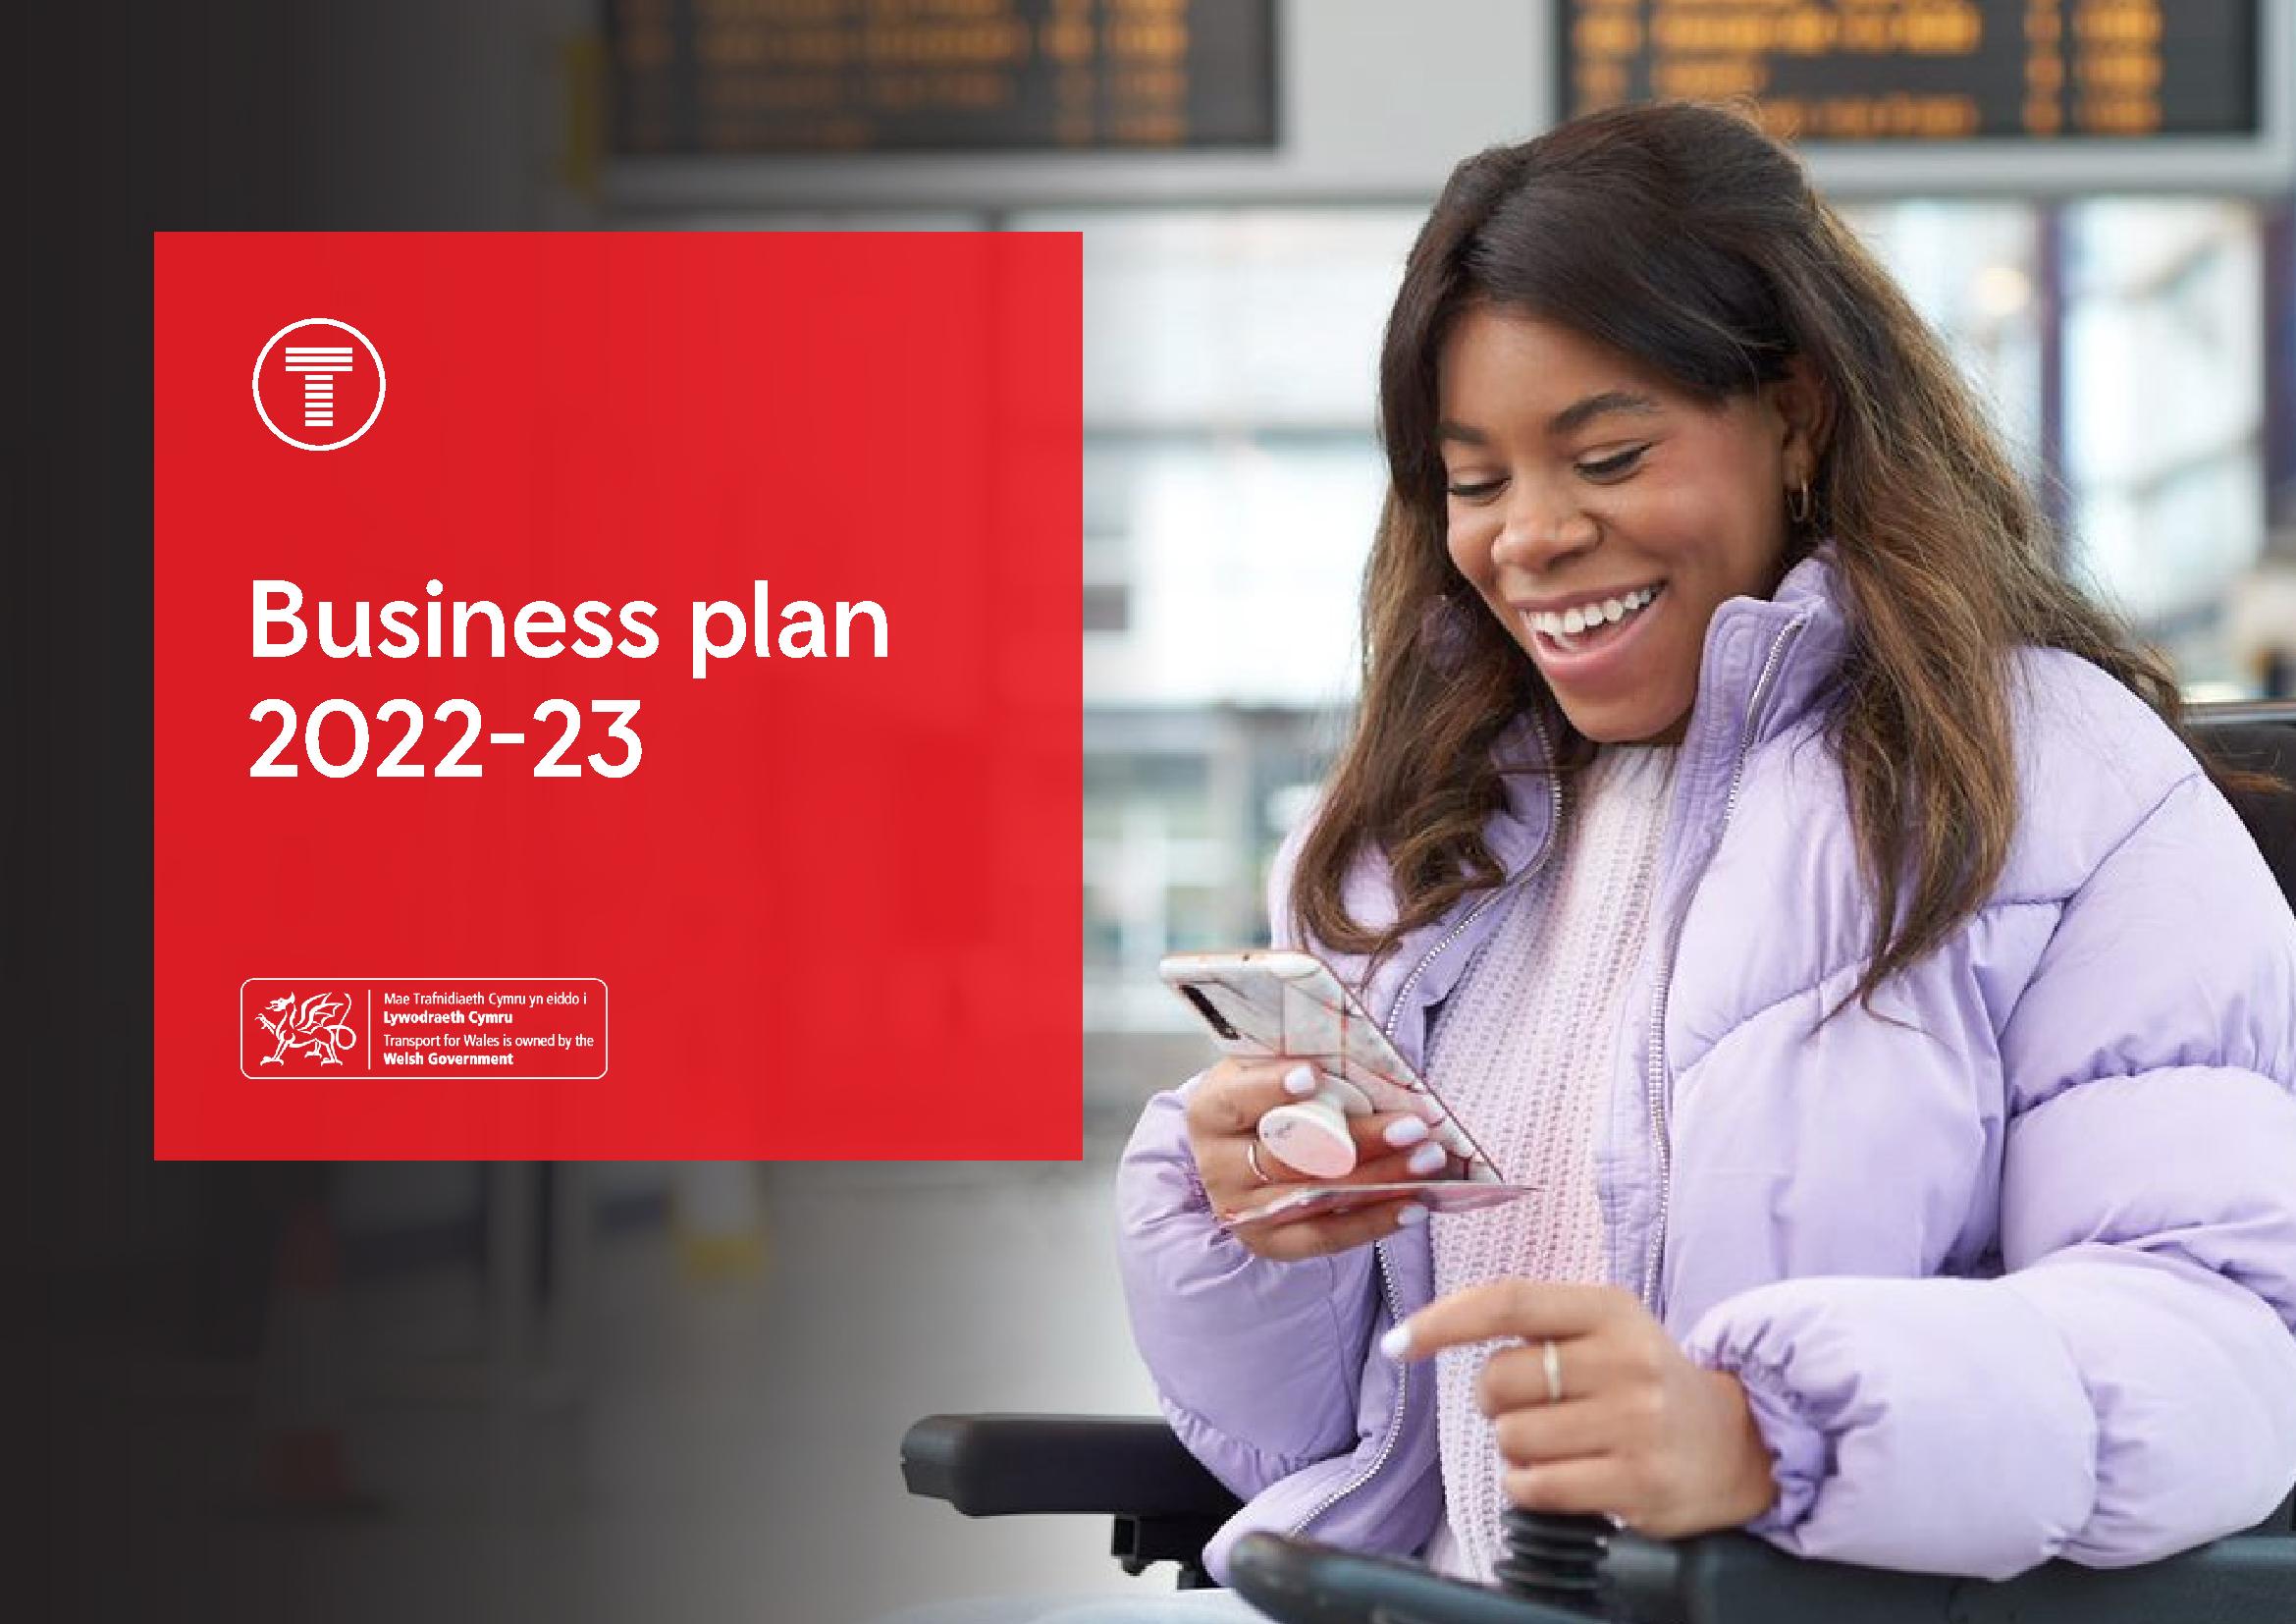 Business plan 2022-23